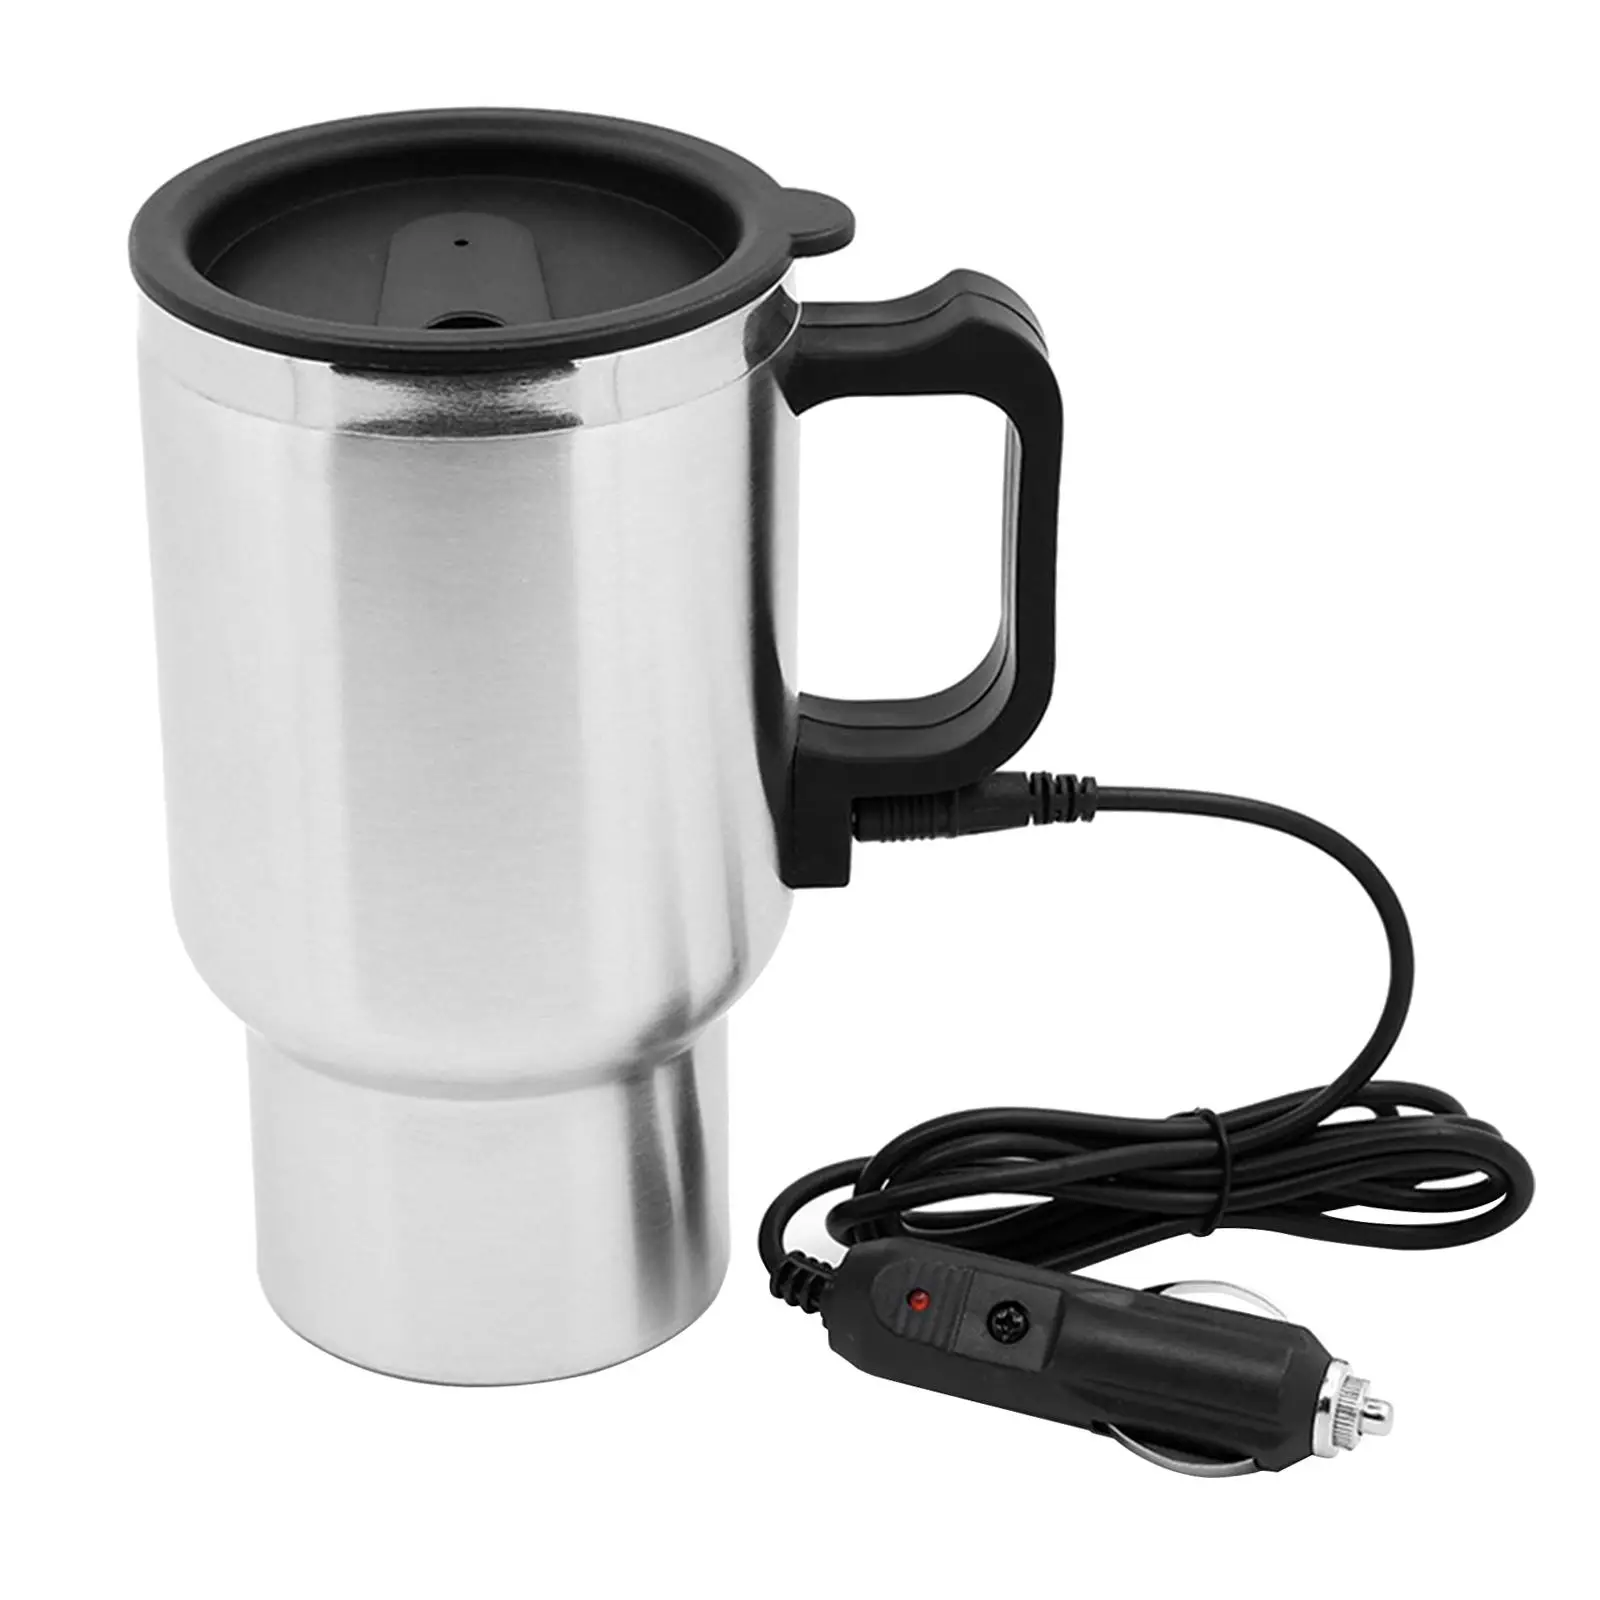 Car Heating Cup 500ml Heater Coffee Cup for Tea Milk Heating Water Cars Trucks